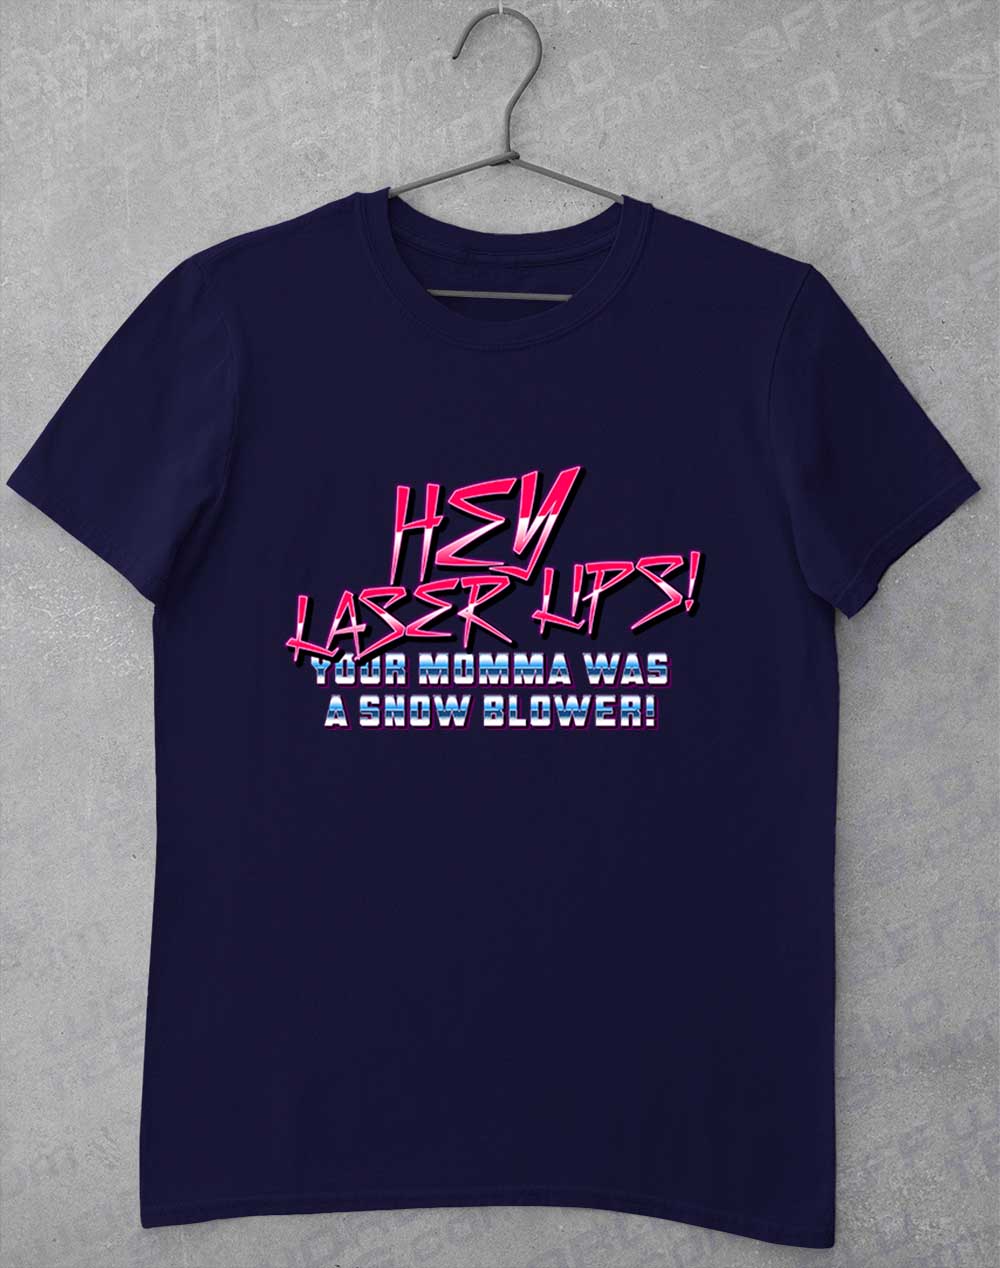 Navy - Hey Laser Lips T-Shirt